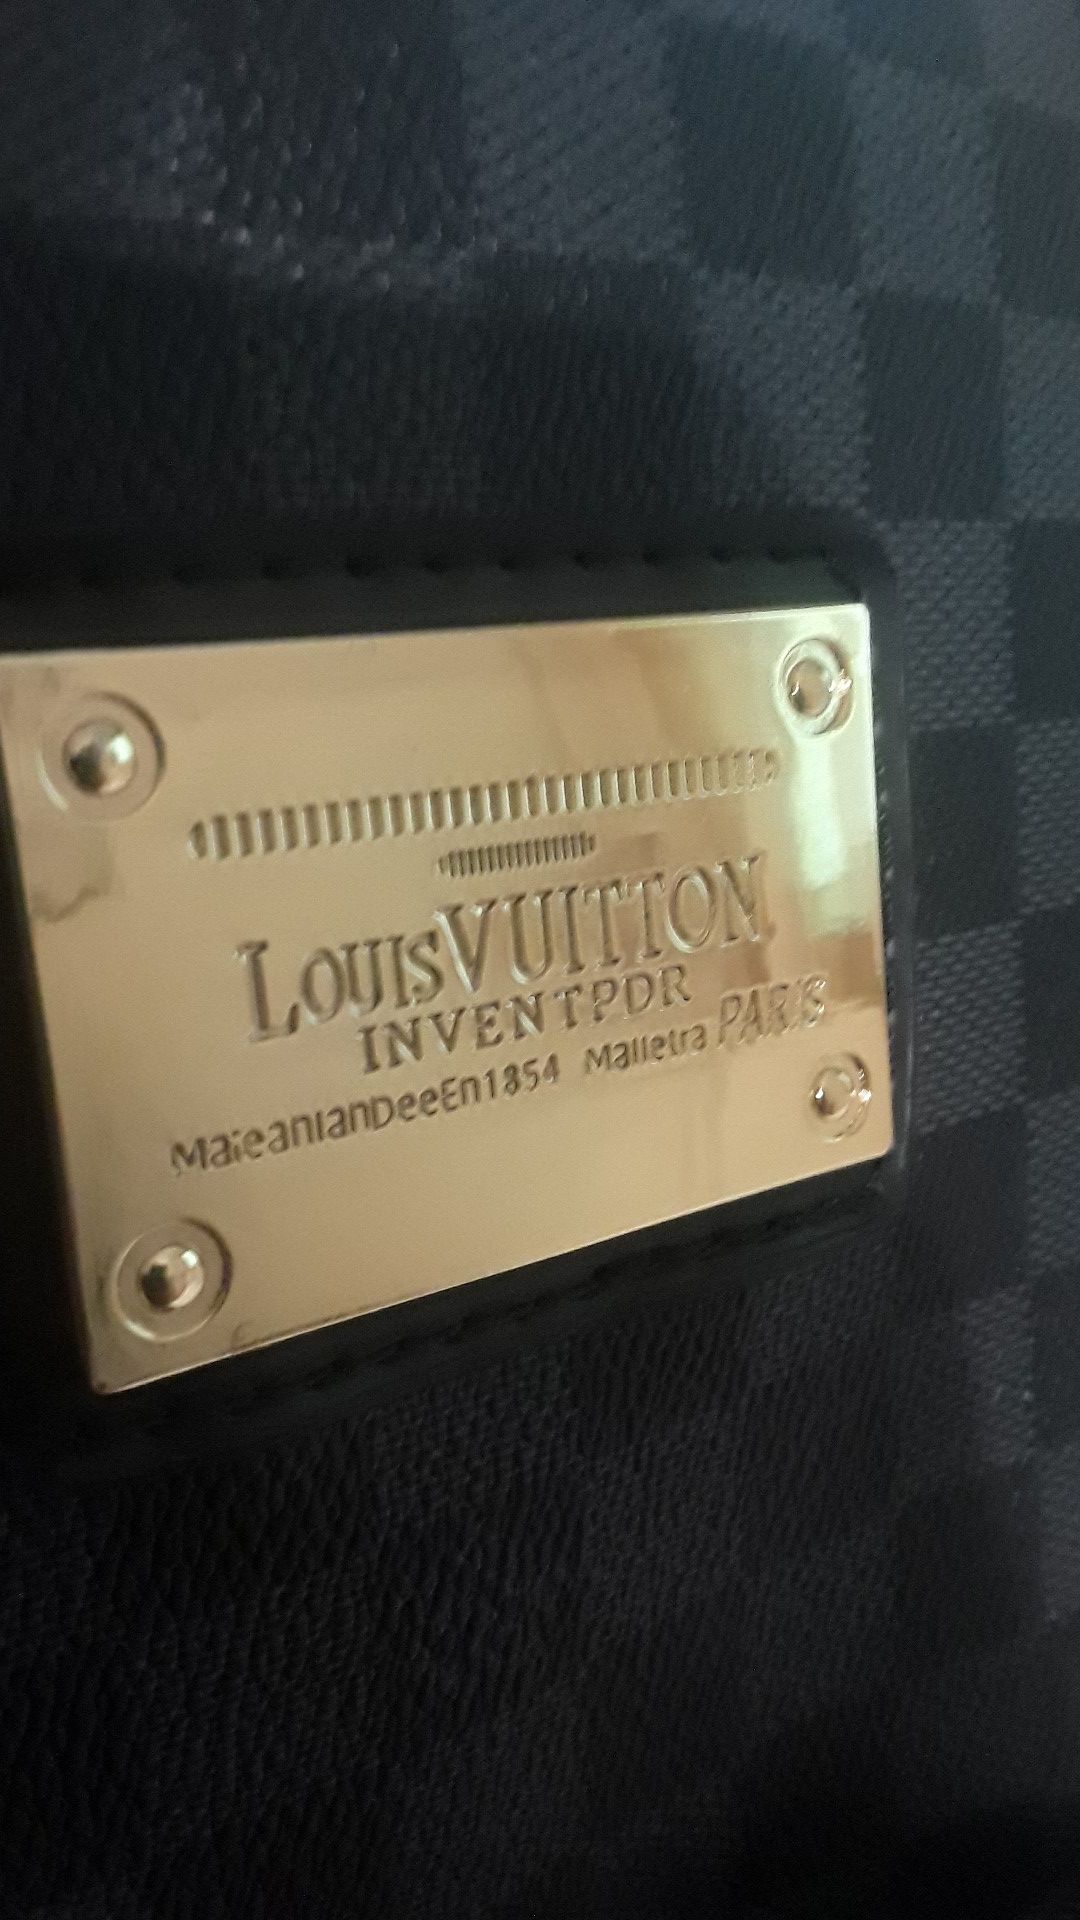 Louis Vuitton Inventpdr  Natural Resource Department